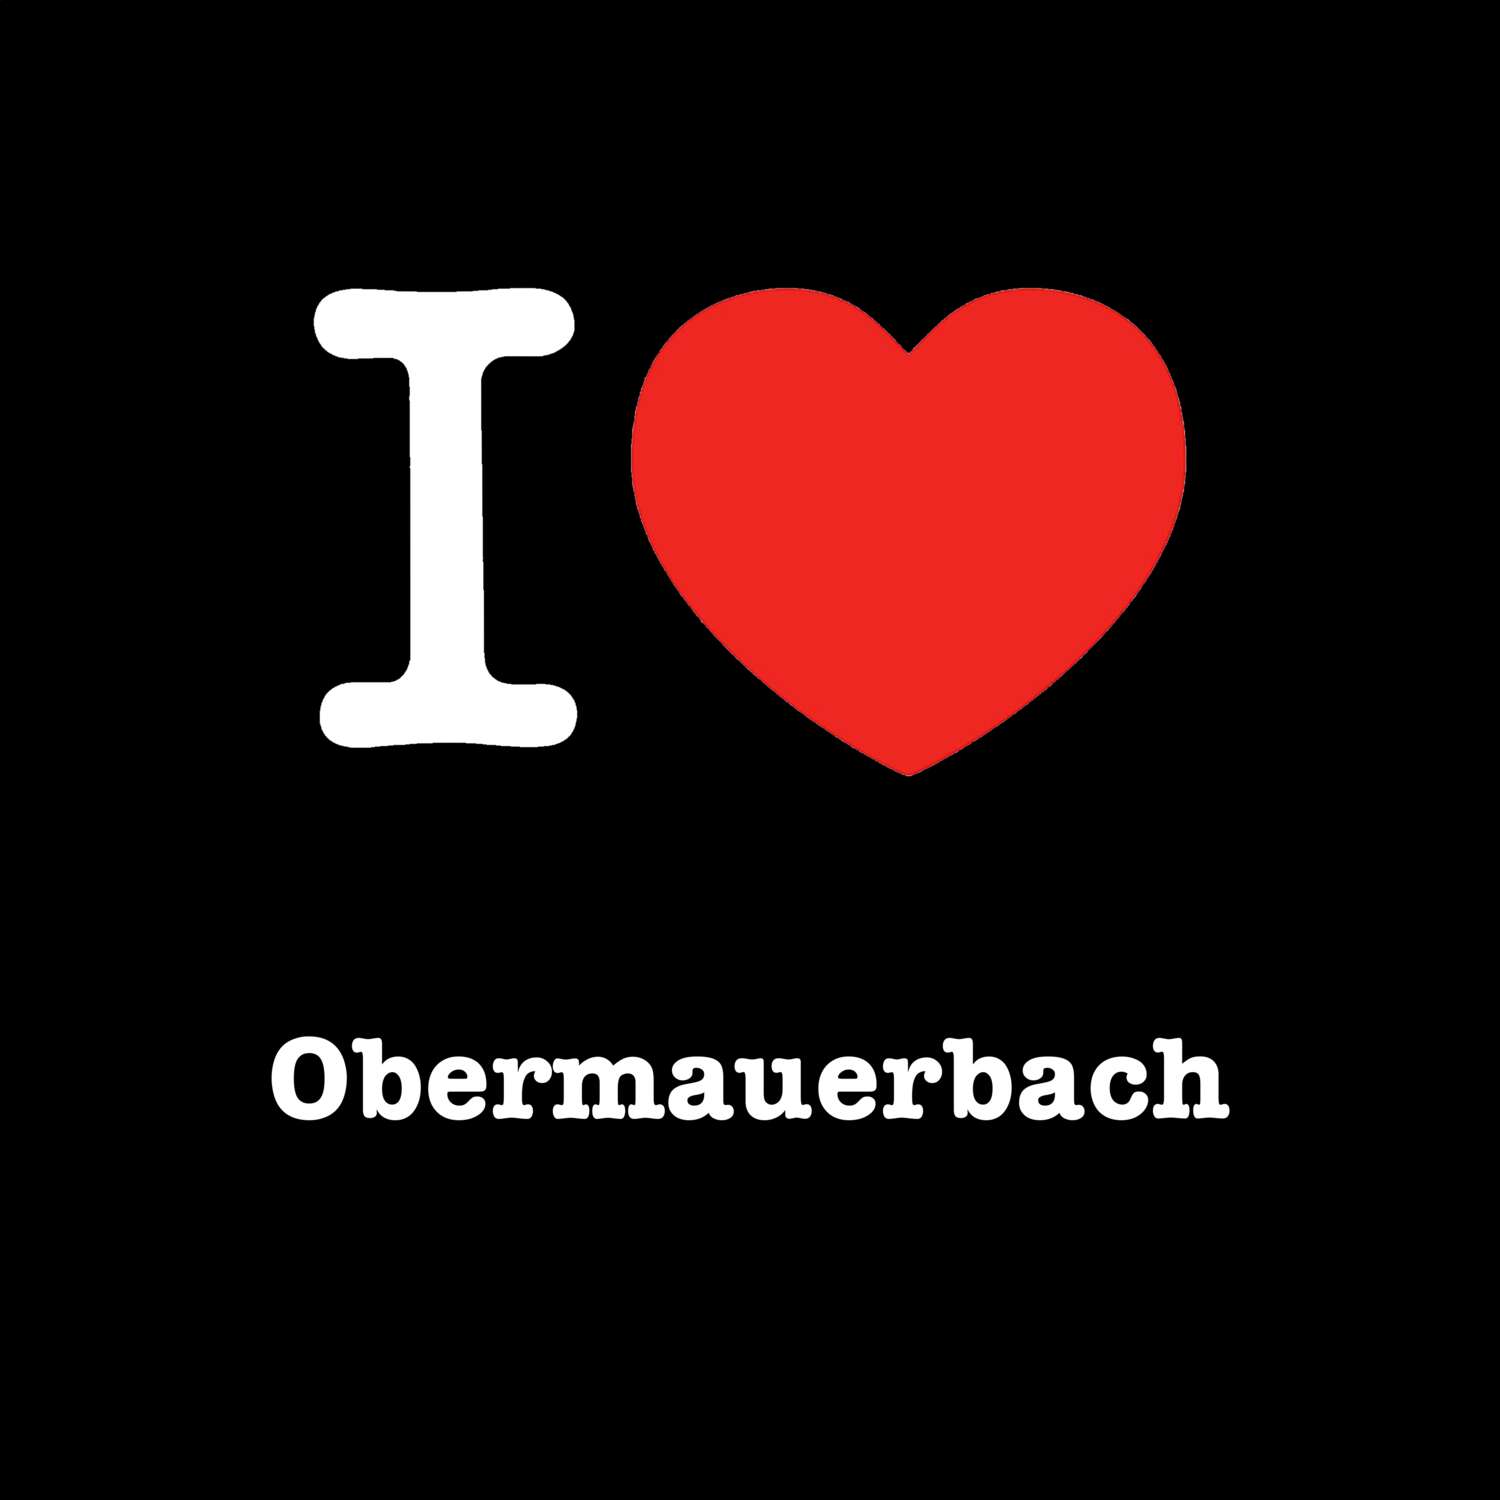 Obermauerbach T-Shirt »I love«